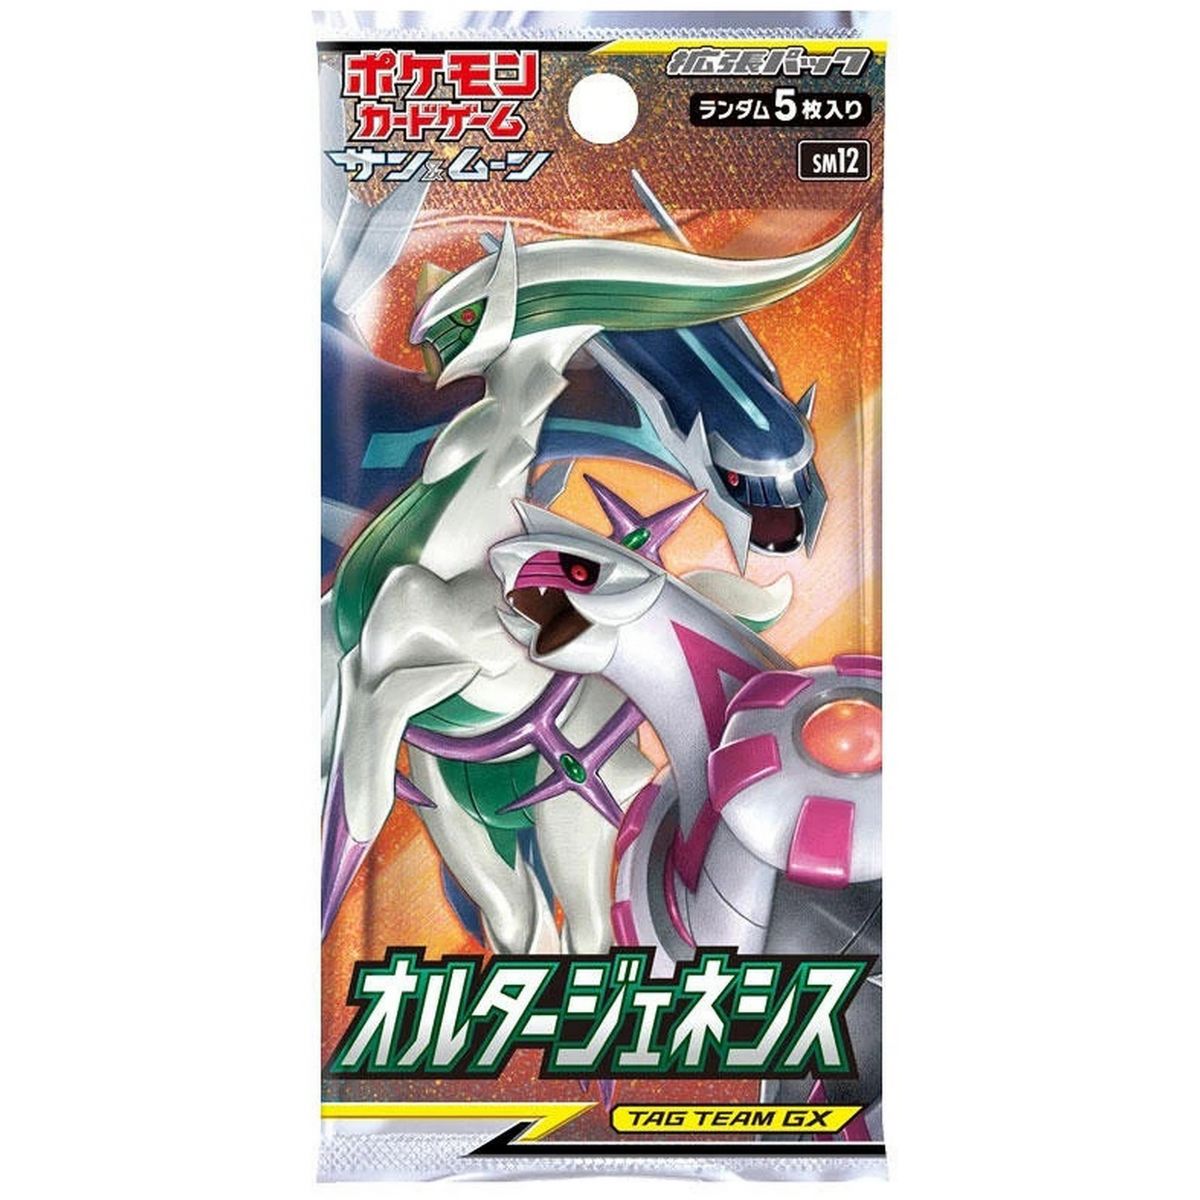 Pokémon - Boosters - Alter Genesis [SM12] - JP